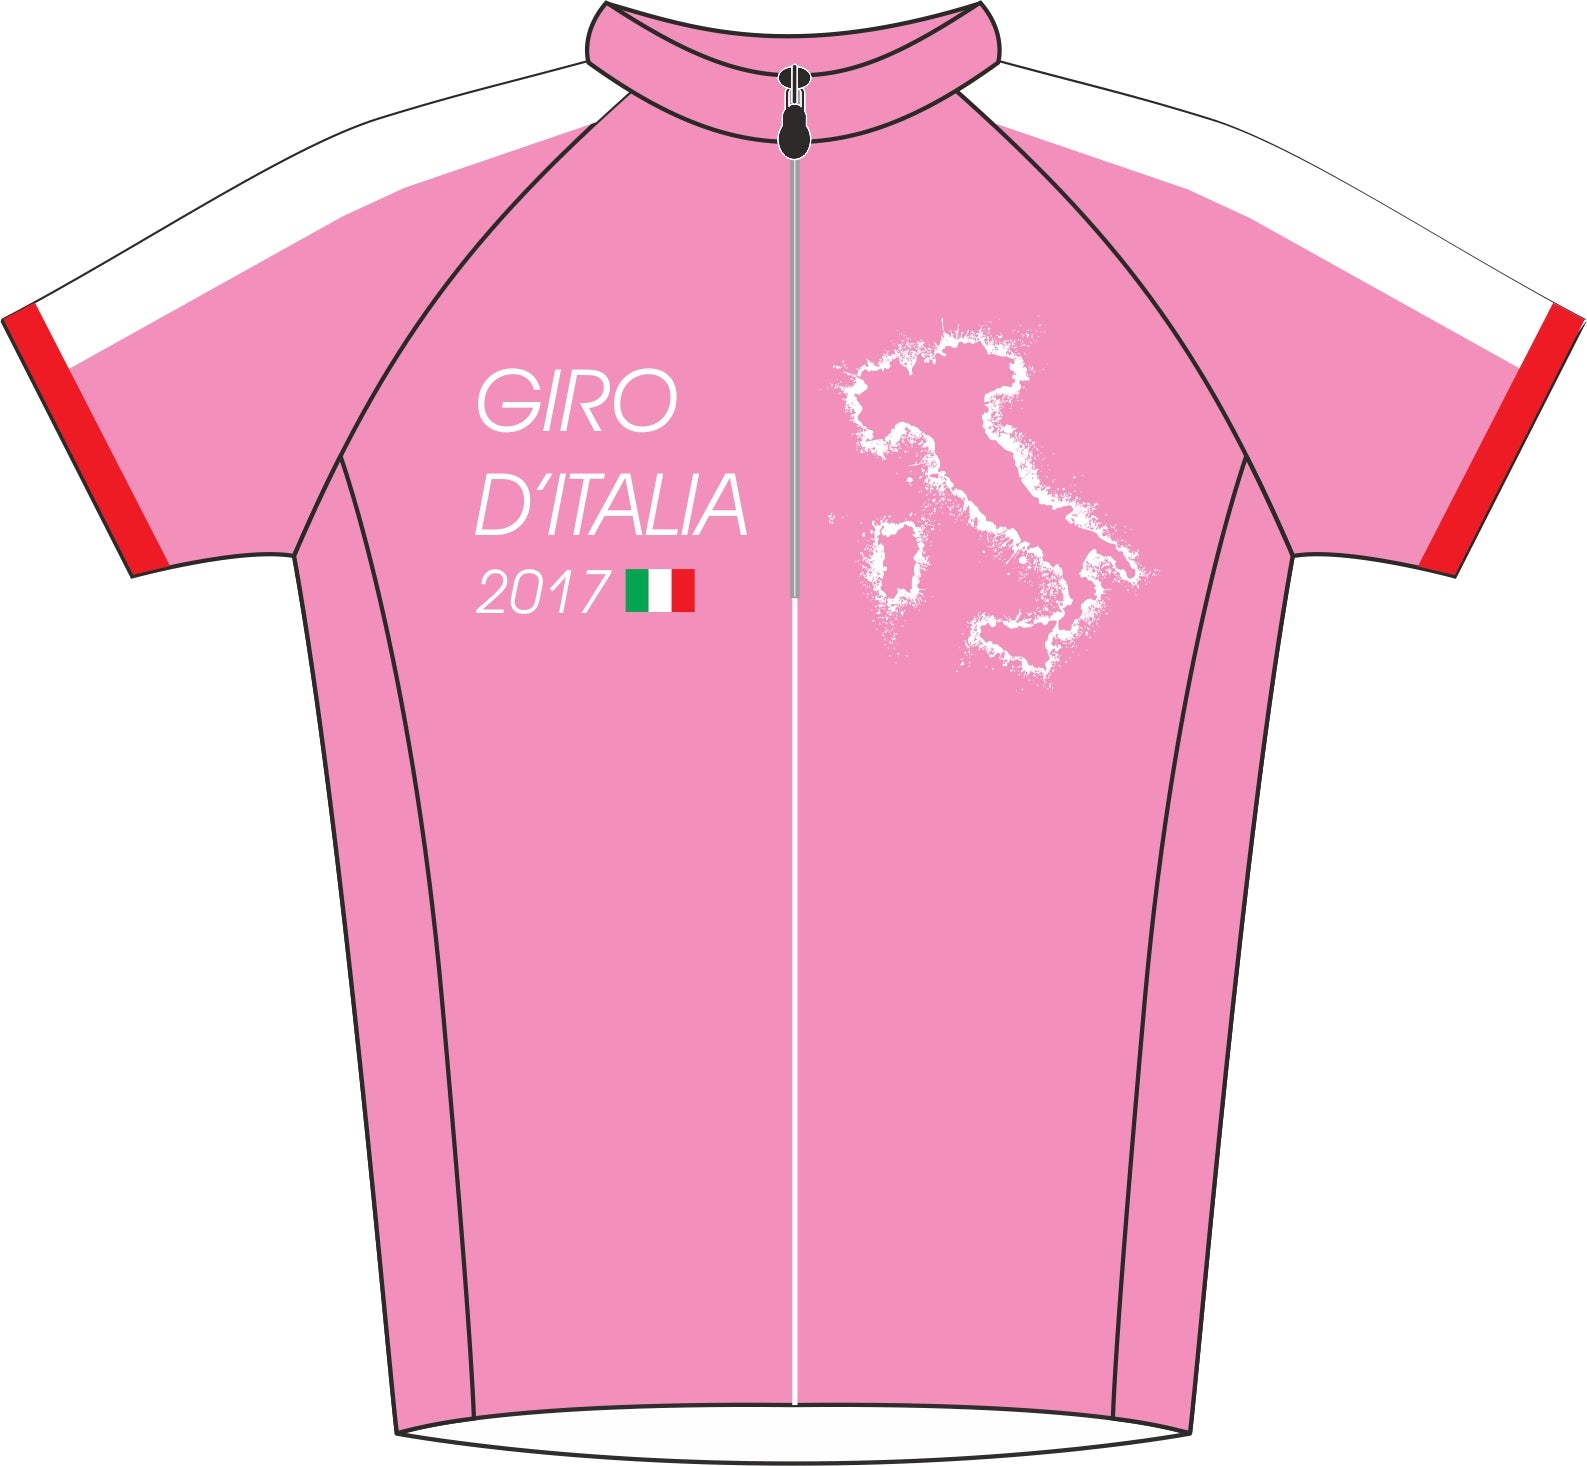 Giro d'Italia Road Jersey Front